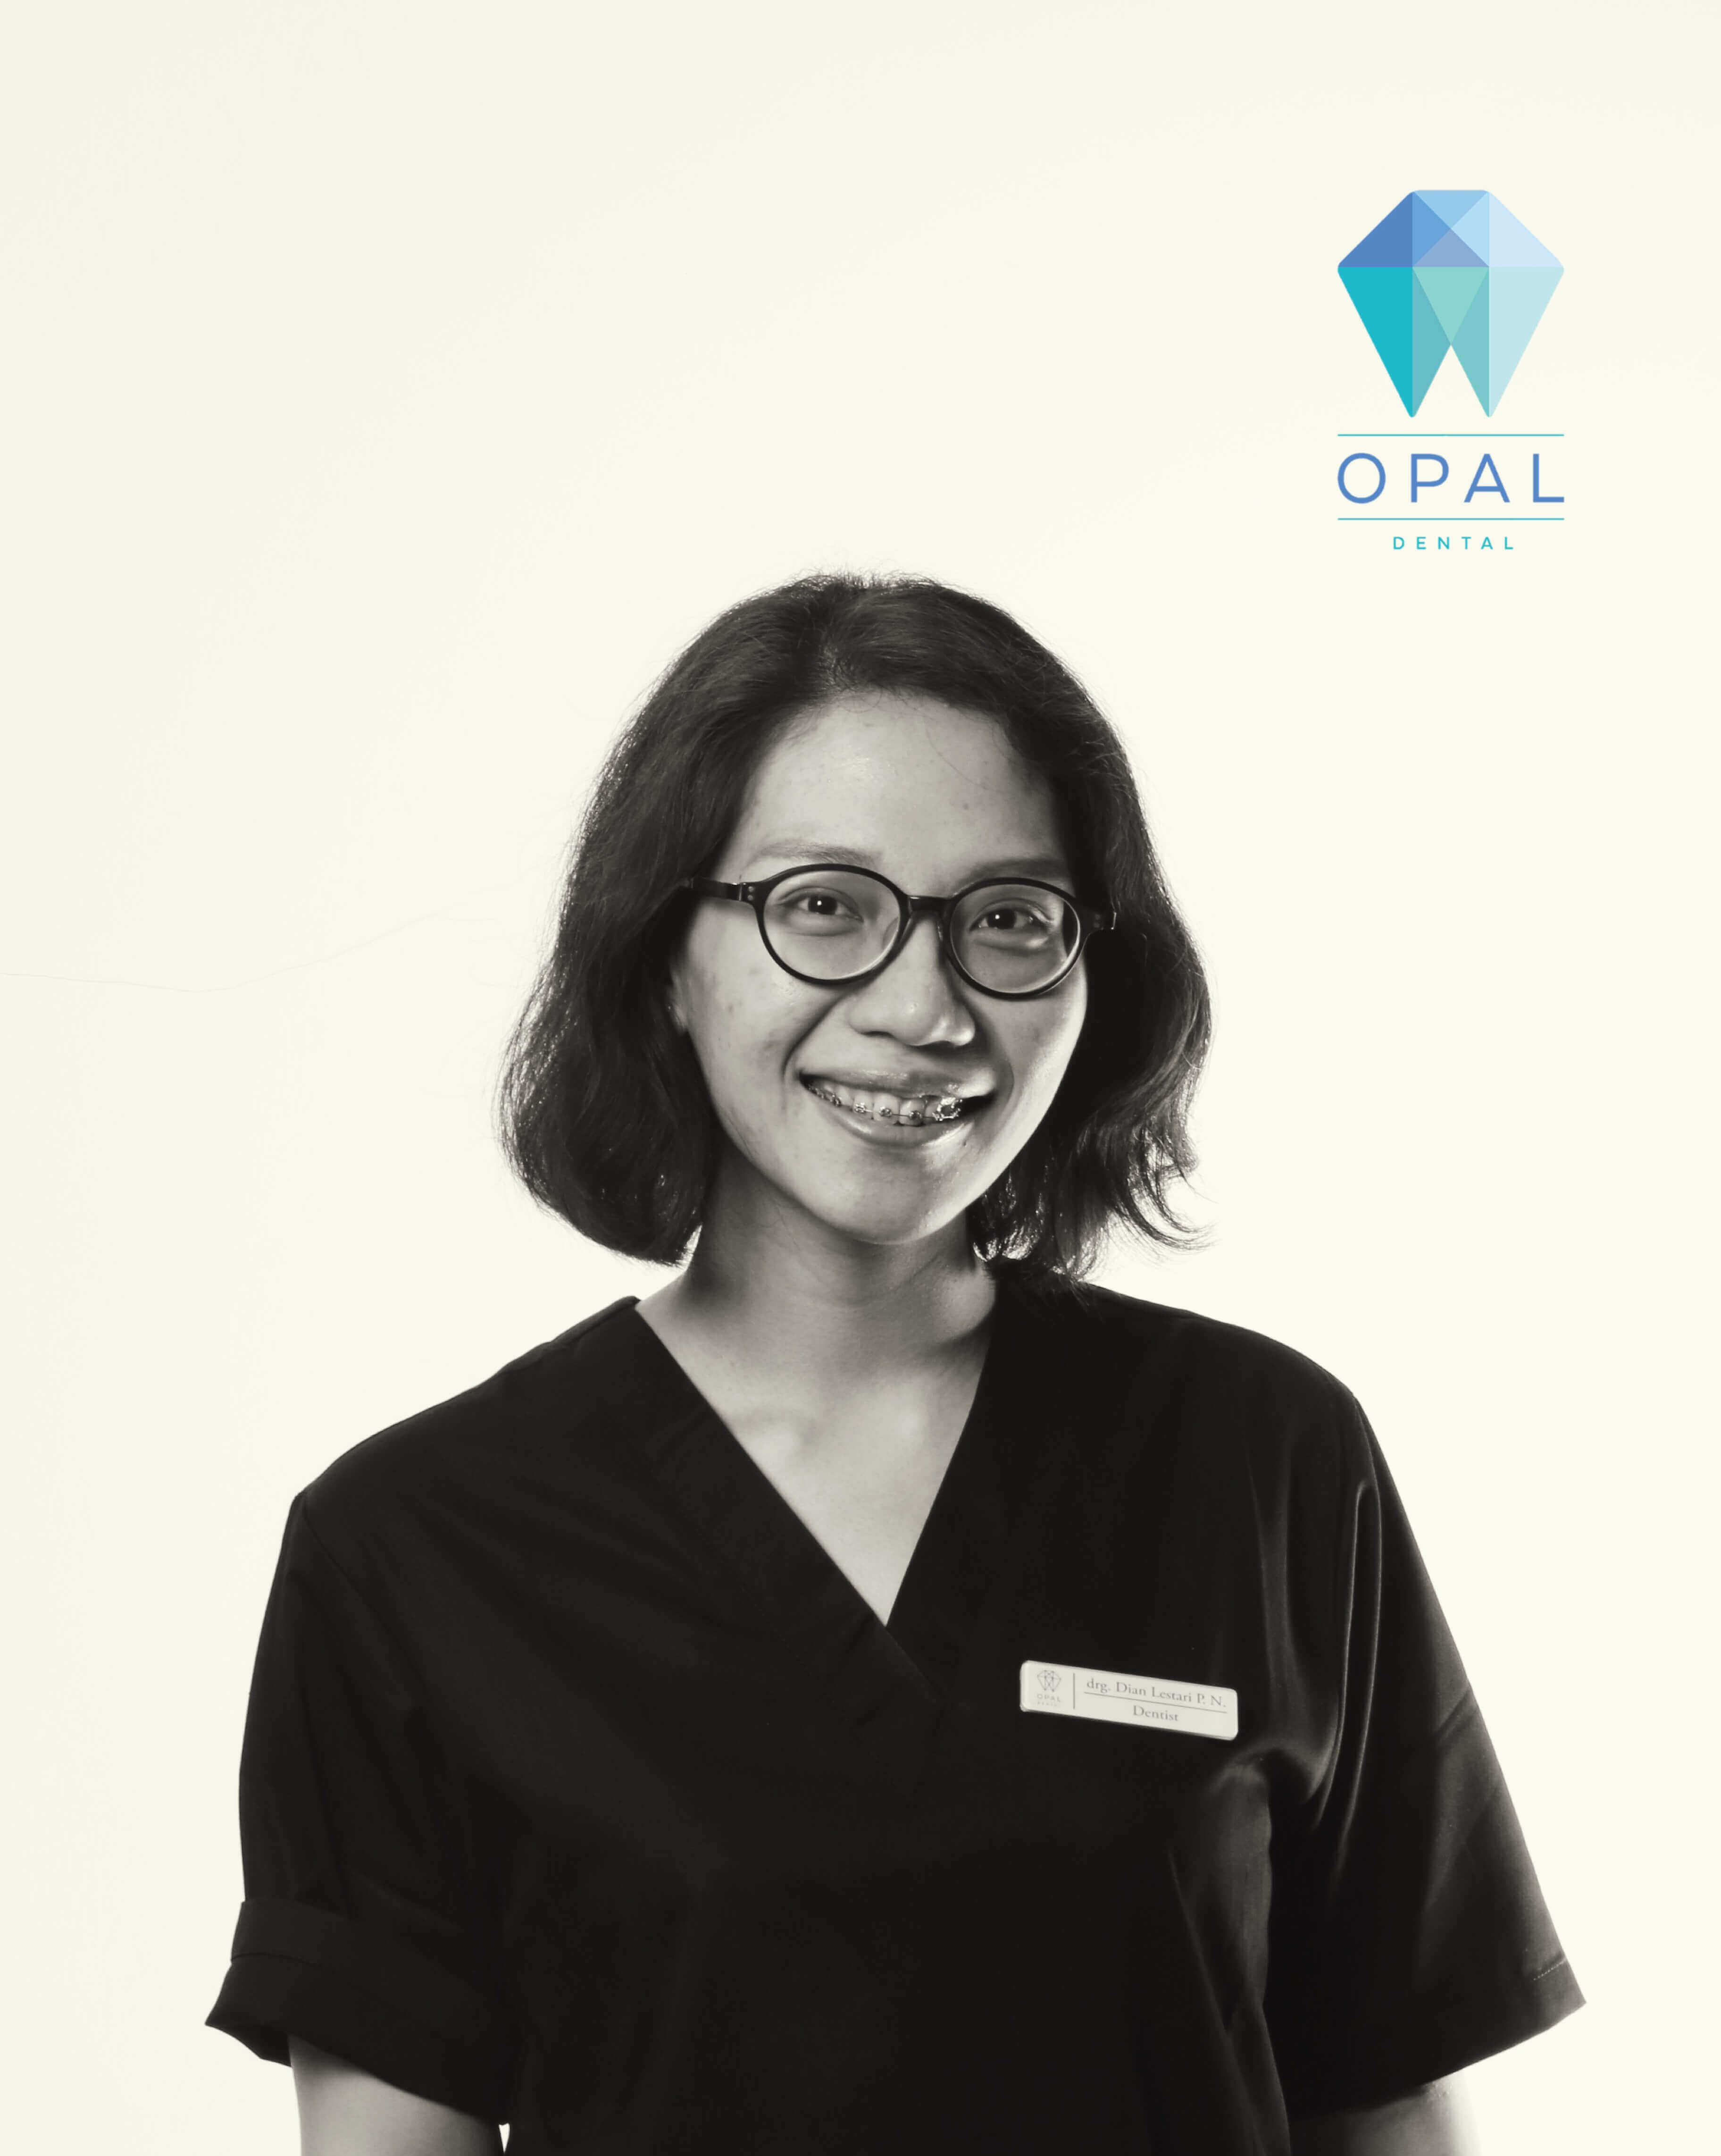 Jadwal Dokter Opal Dental Klinik Gigi  Yogyakarta